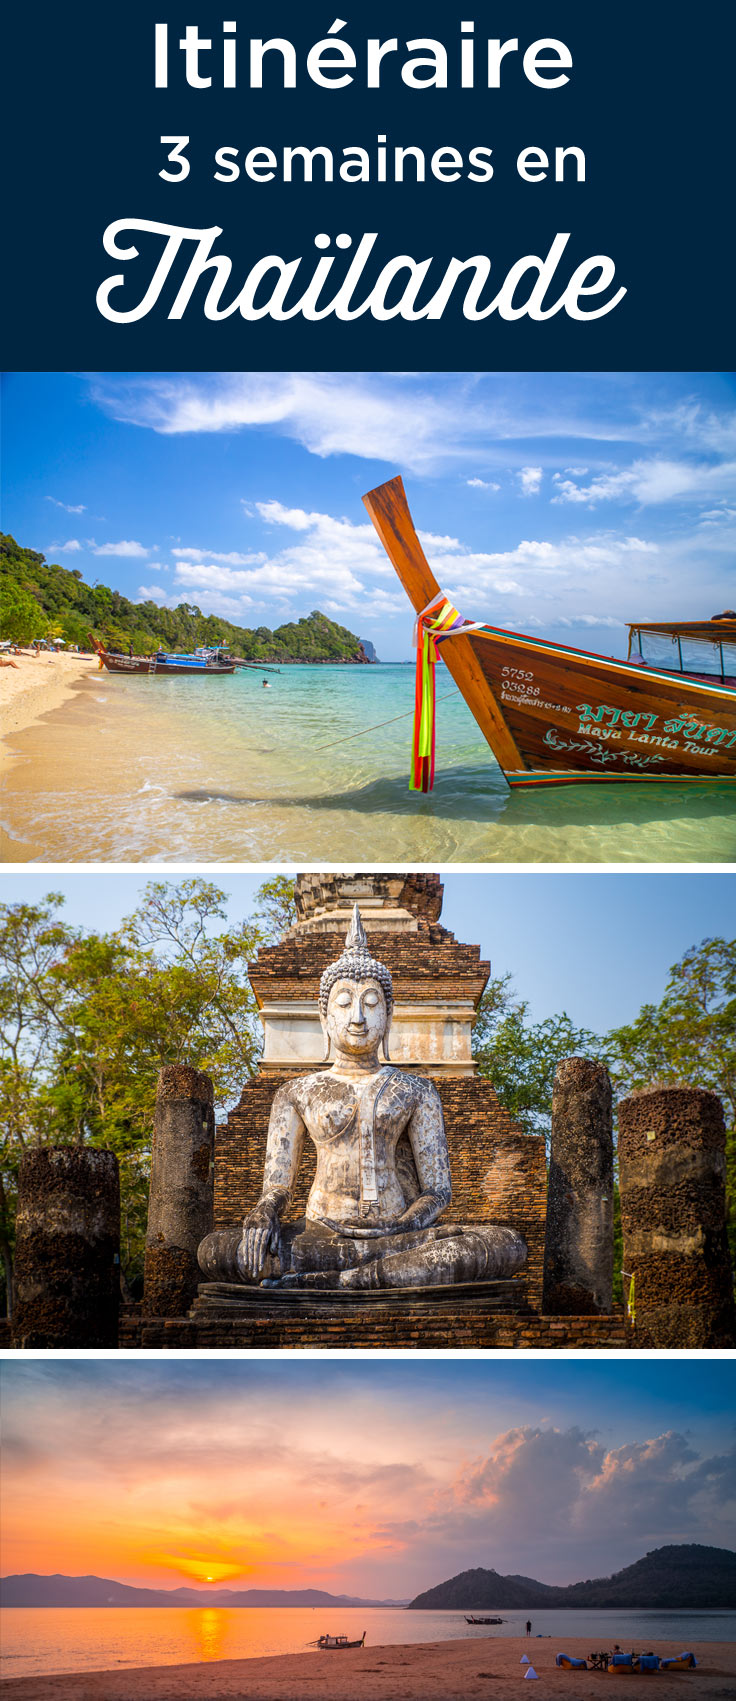 itineraire 3 semaines en Thailande